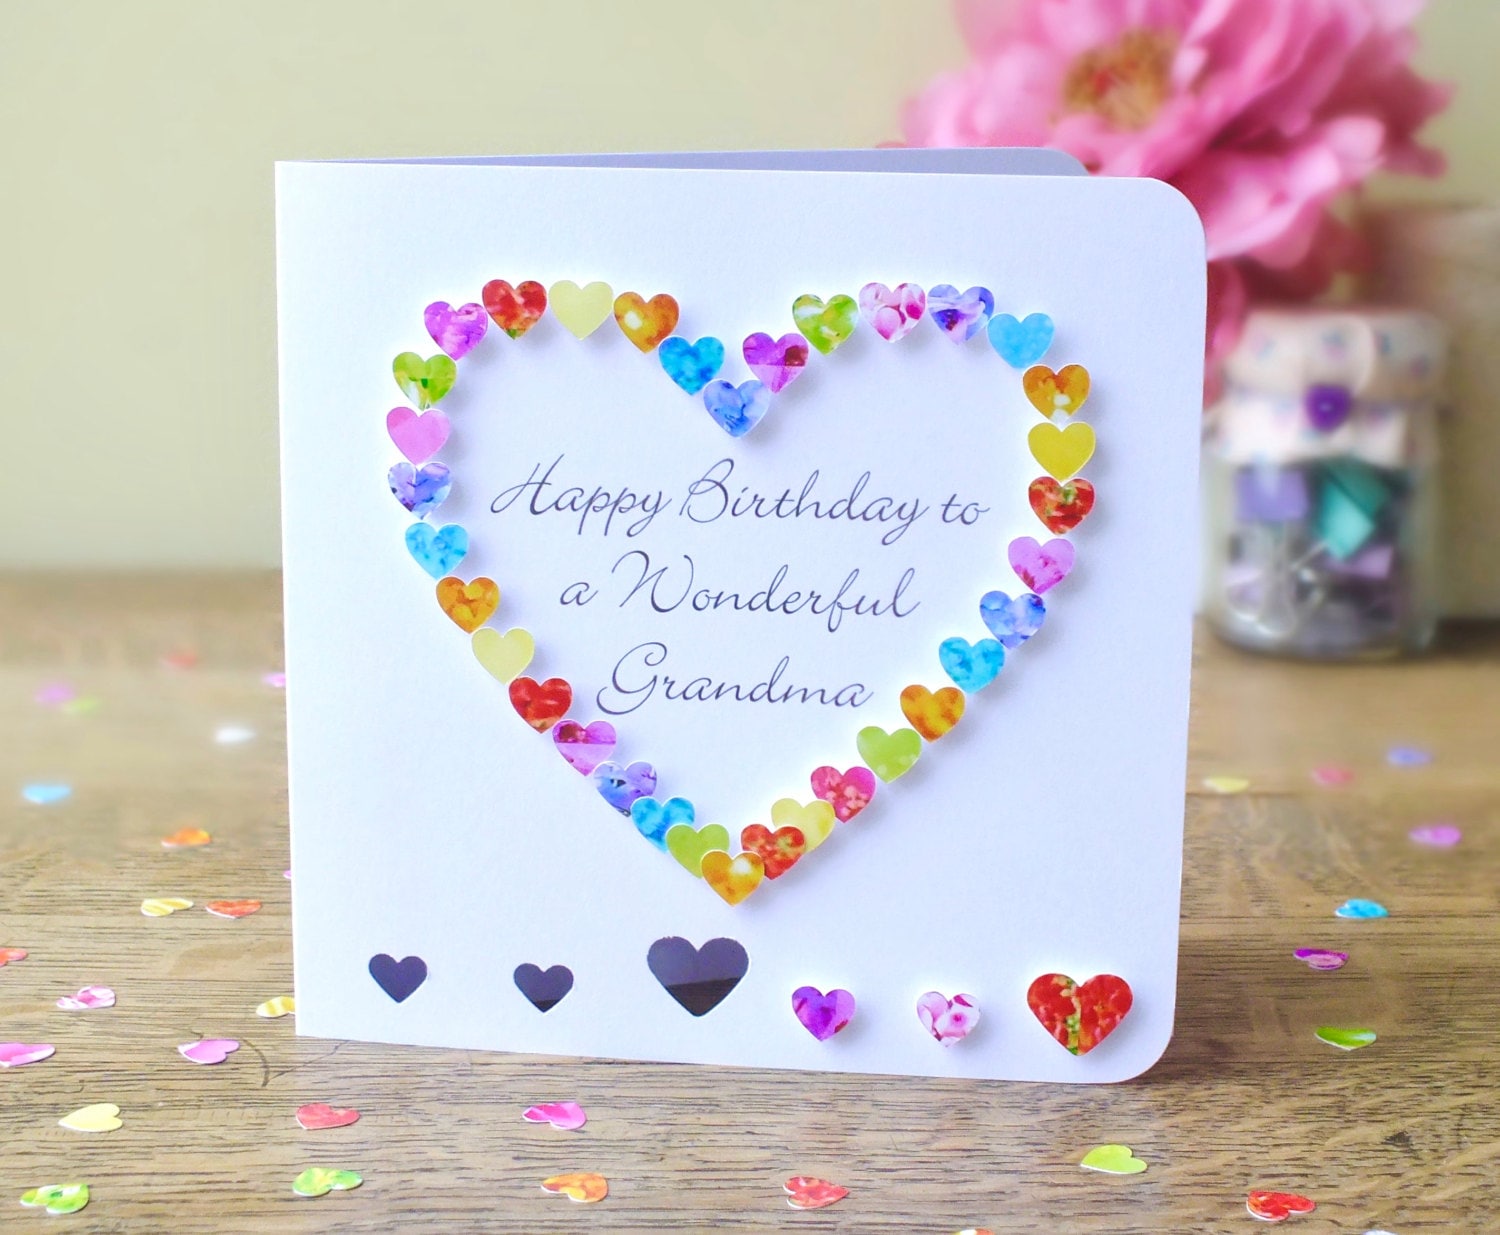 grandma-birthday-card-grandma-card-happy-birthday-grandma-floral